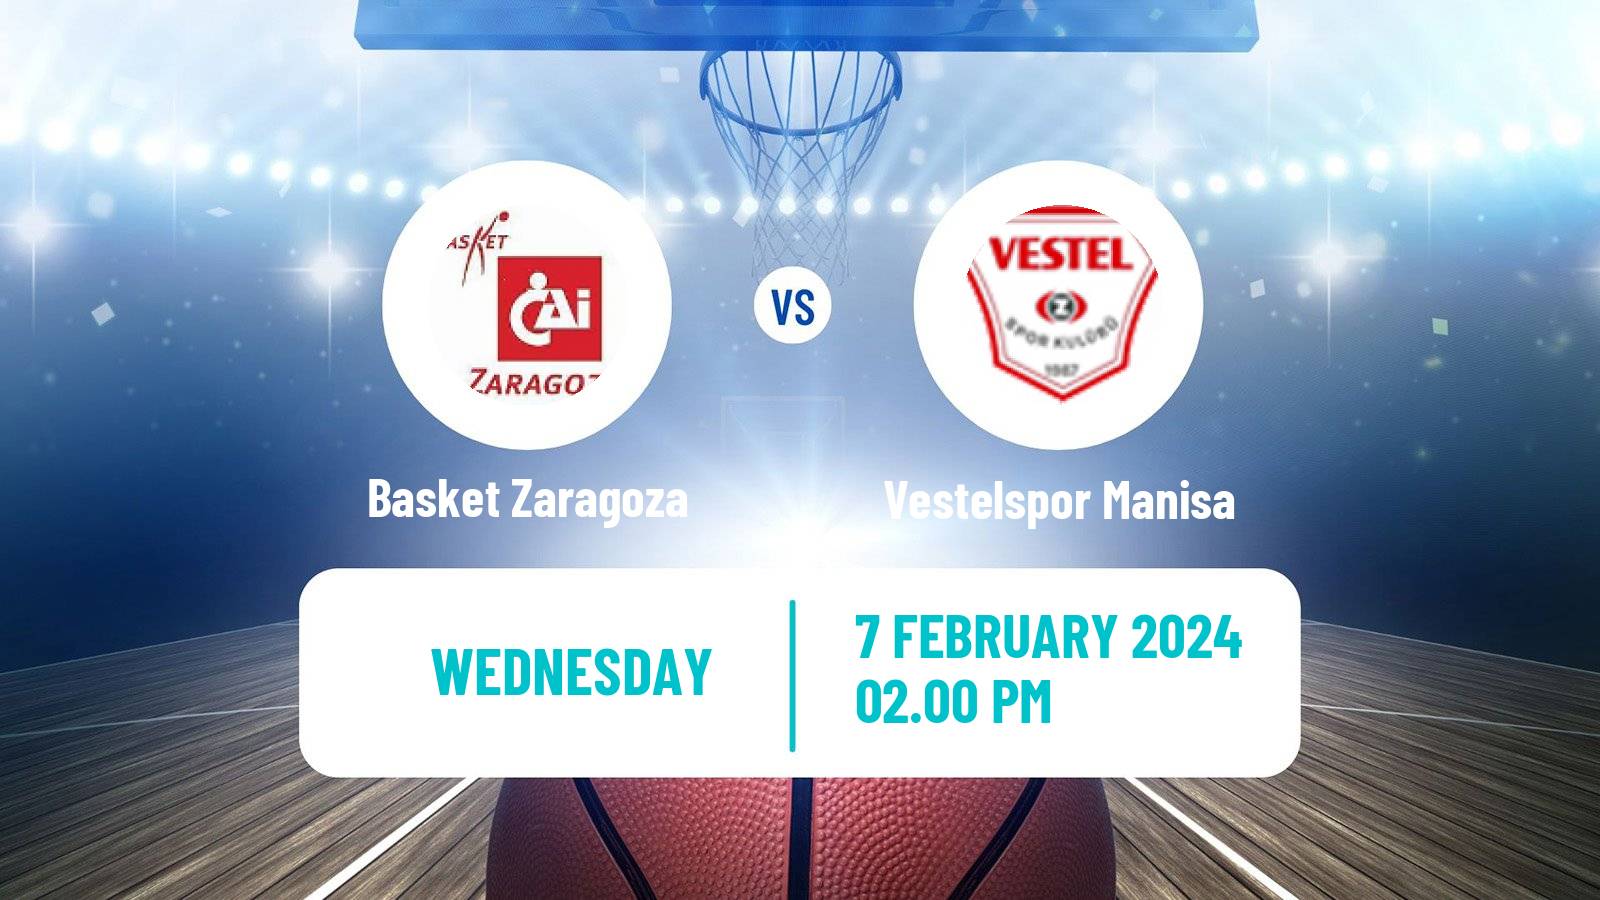 Basketball FIBA Europe Cup Basket Zaragoza - Vestelspor Manisa